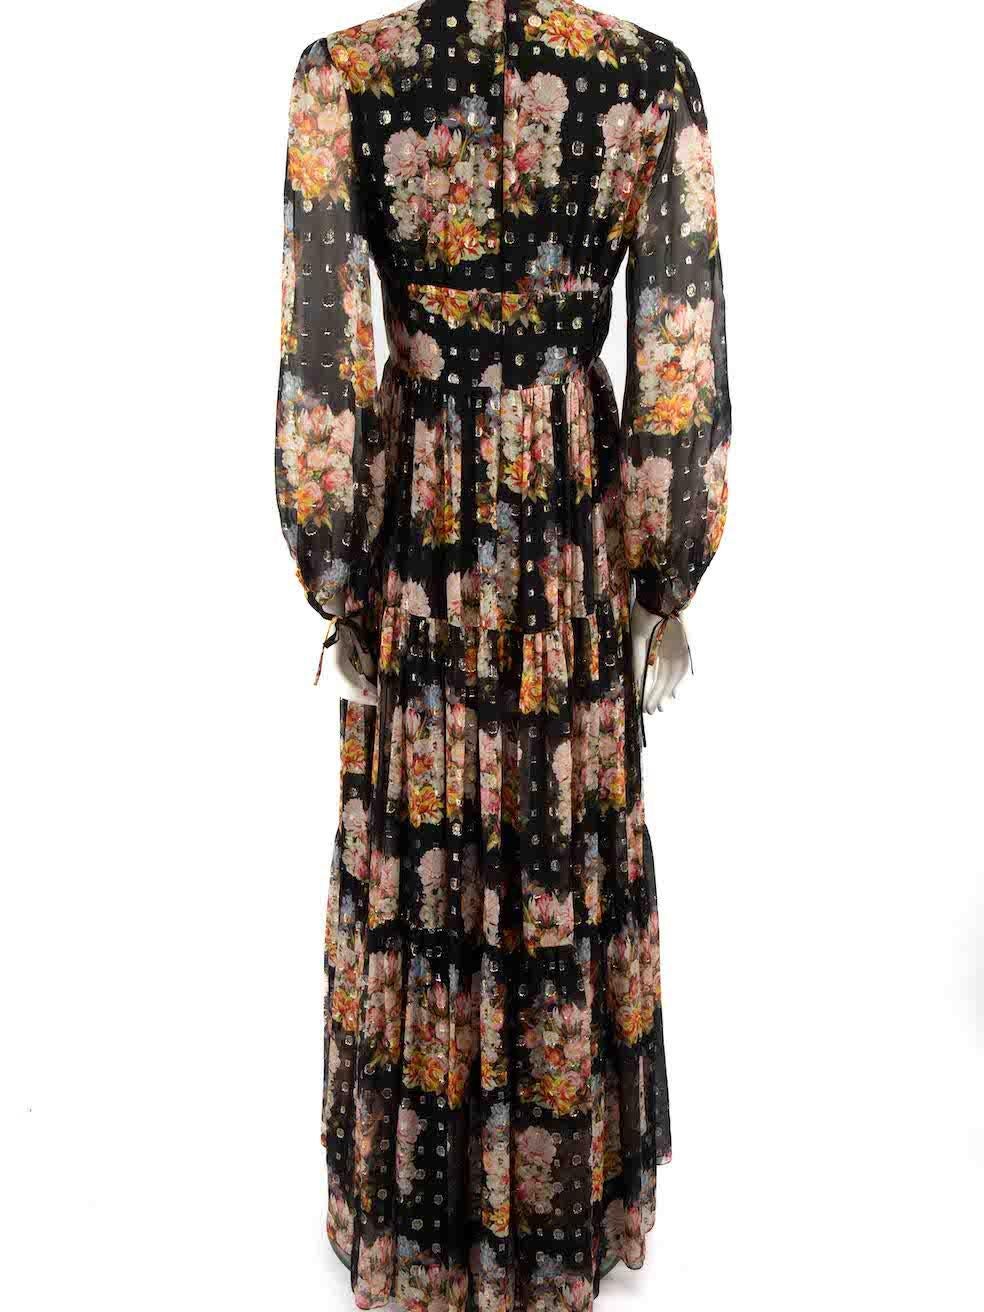 Borgo De Nor Black Freya Floral Print Maxi Dress Size L In Good Condition For Sale In London, GB